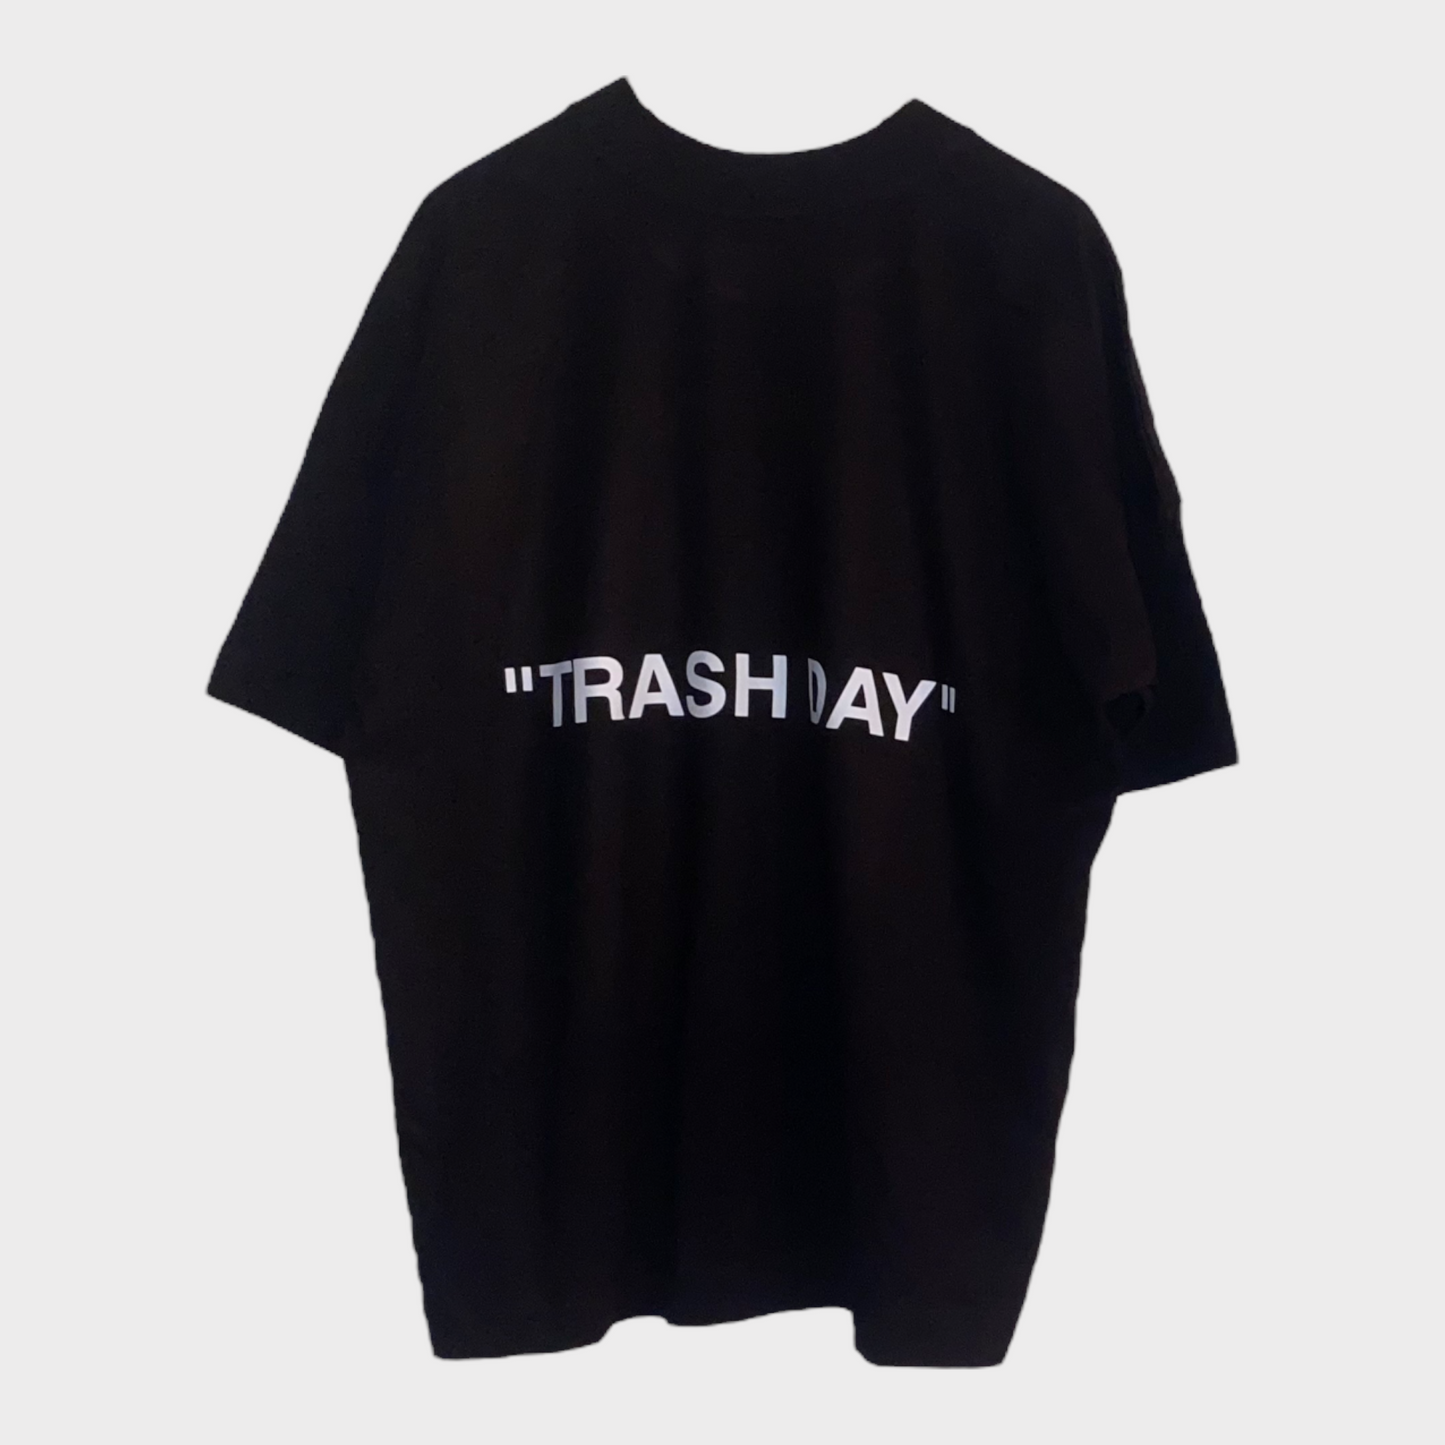 "TRASH DAY" BLACK T-SHIRT